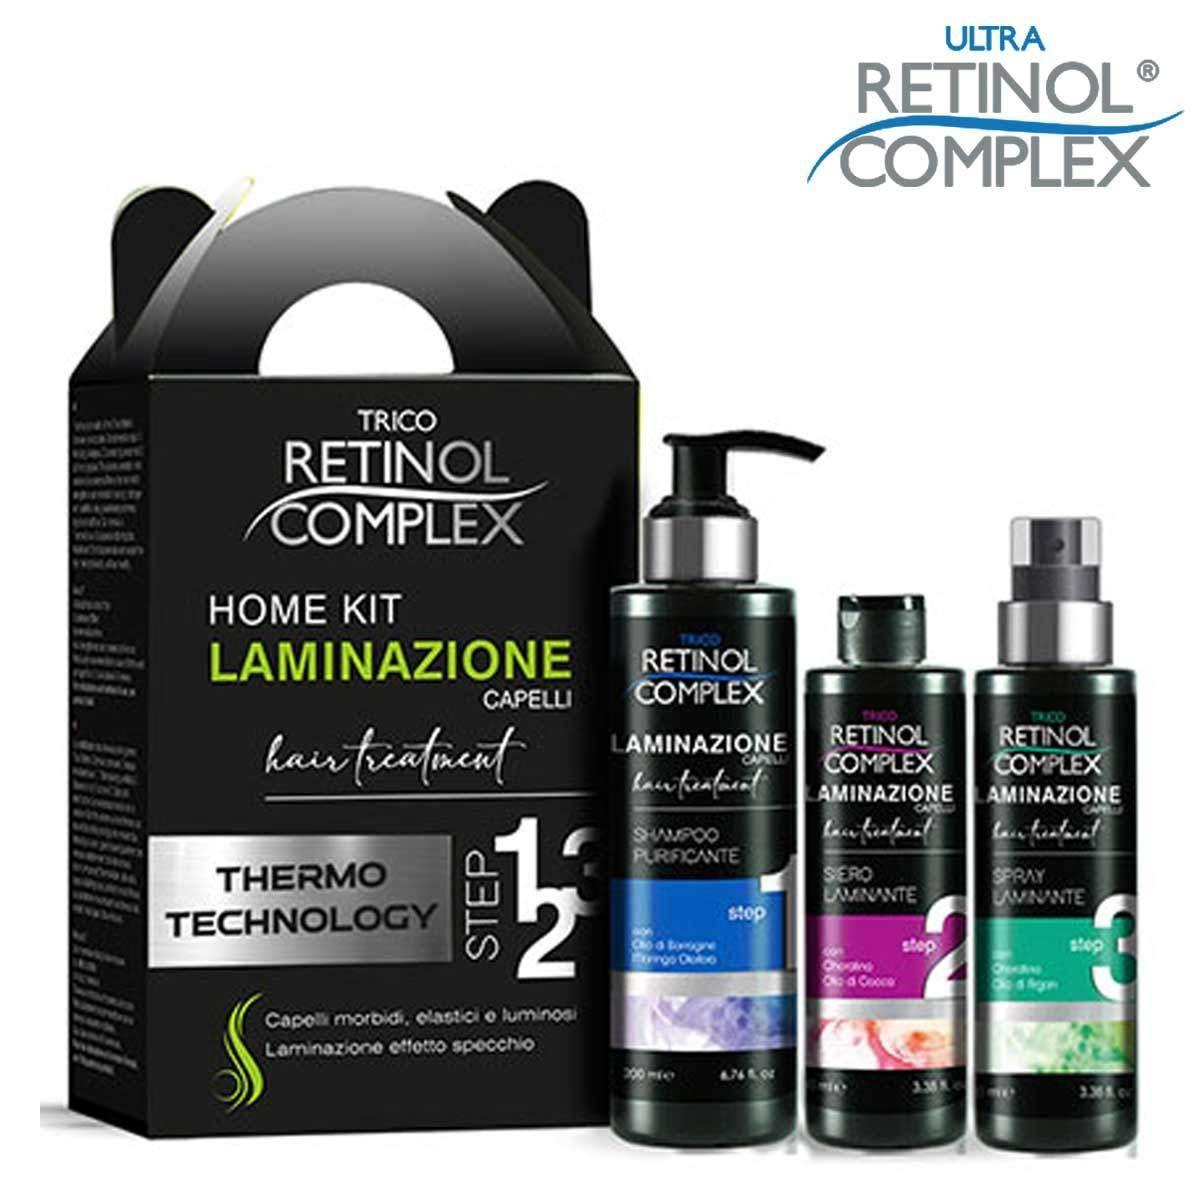 Retinol complex Trico retinol complex home kit laminazione capelli RET445  8057190173962